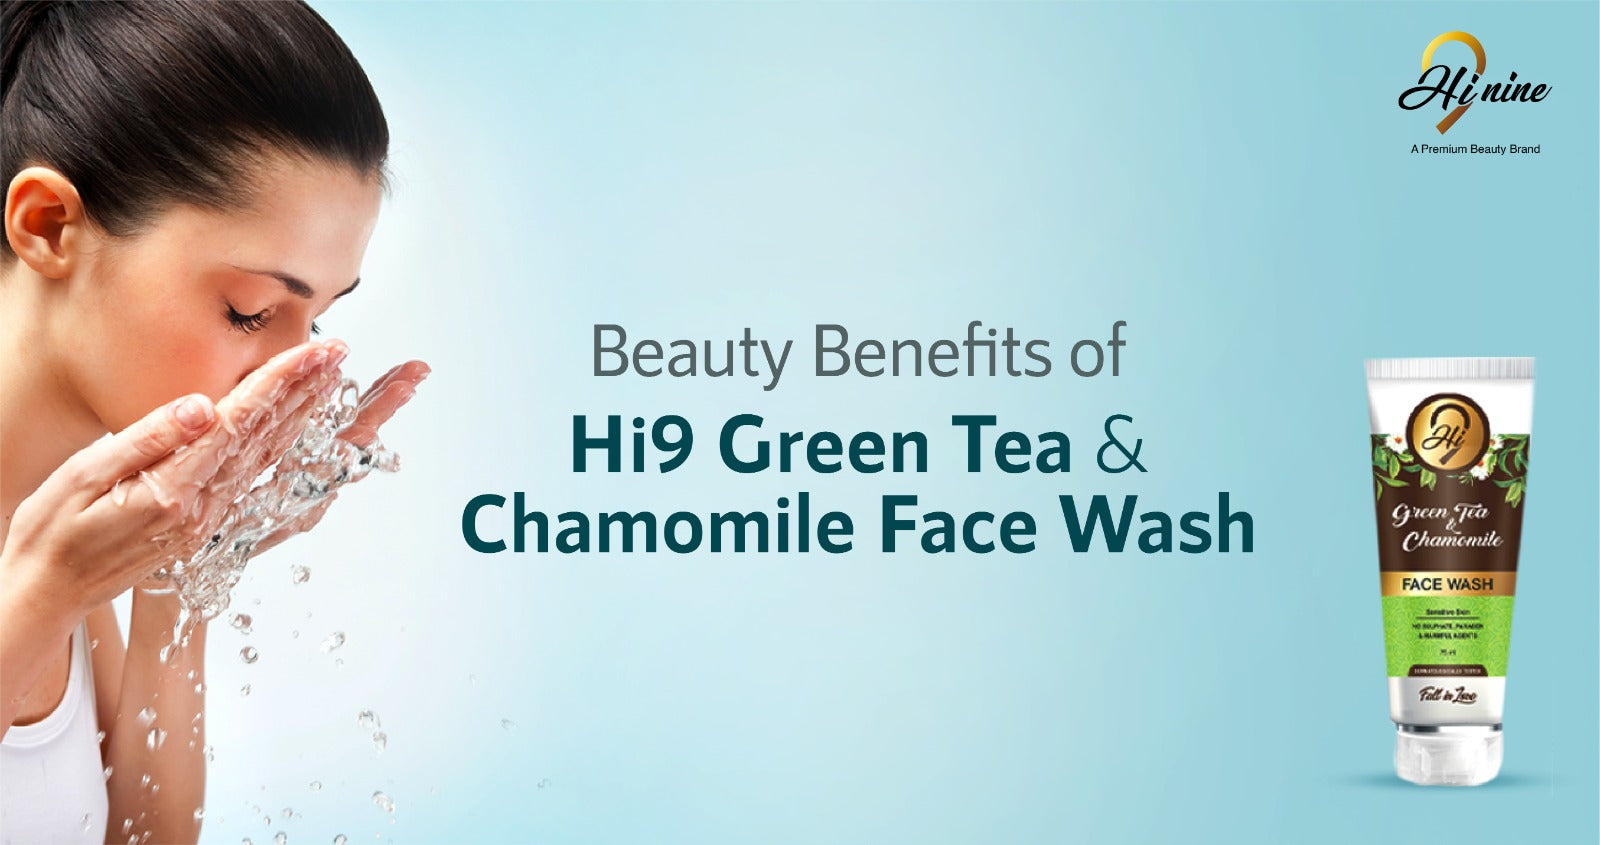 Beauty Benefits of Hi9 Green Tea & Chamomile Face Wash